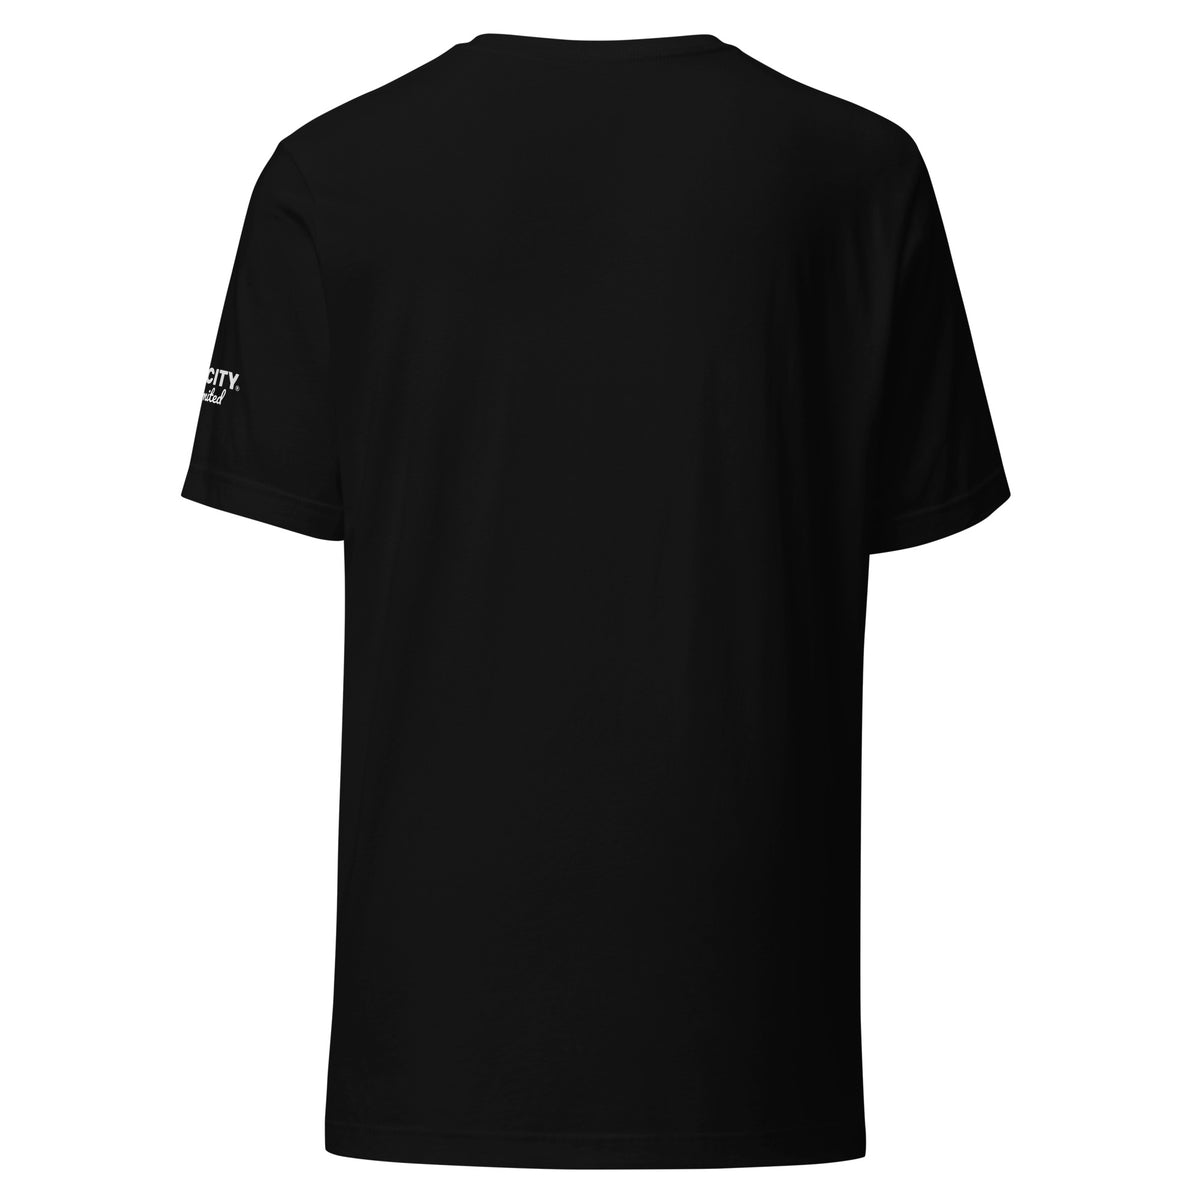 Varcity Panda Vibes Unisex T-Shirt